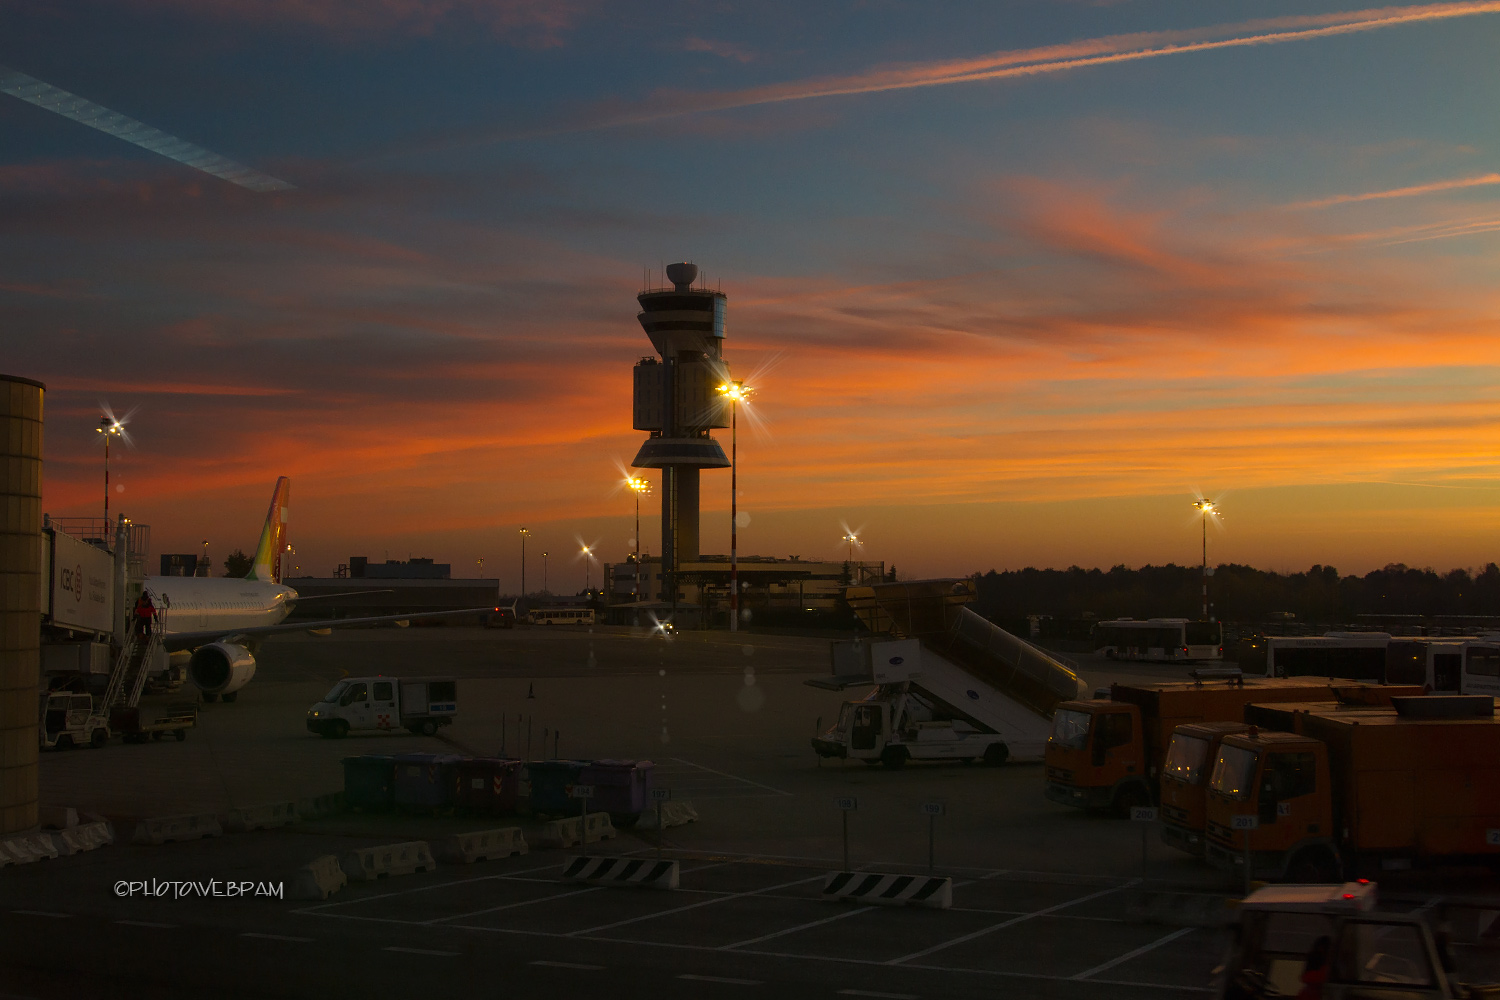 Malpensa airport at sunset...